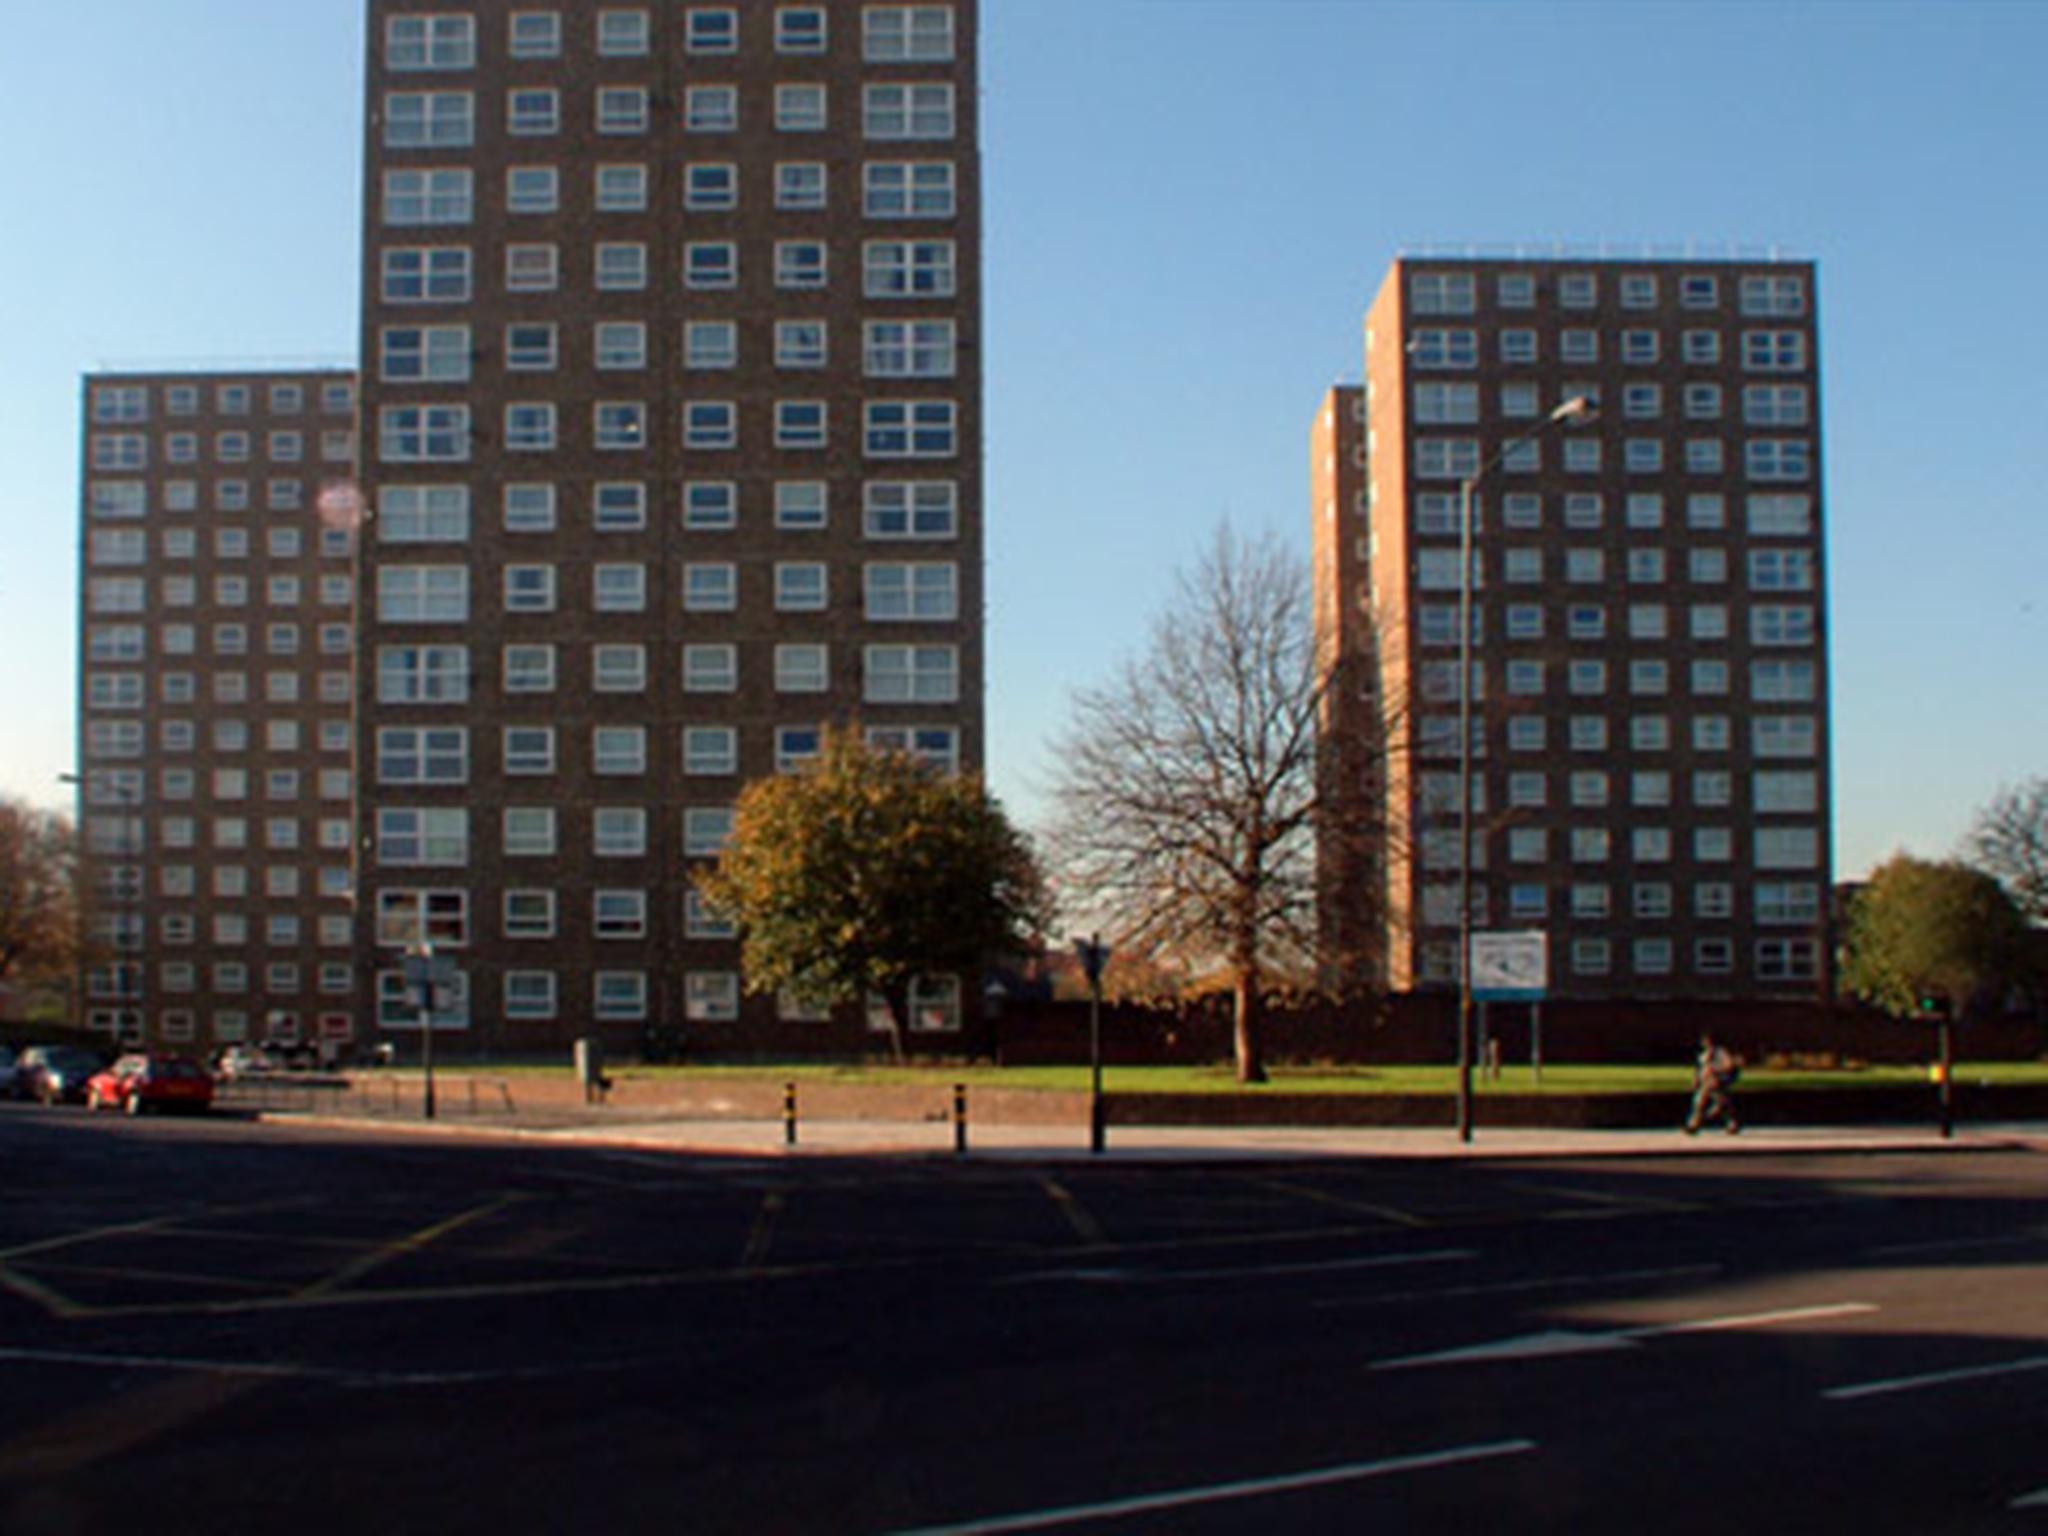 The Ledbury estate in Southwark, south London